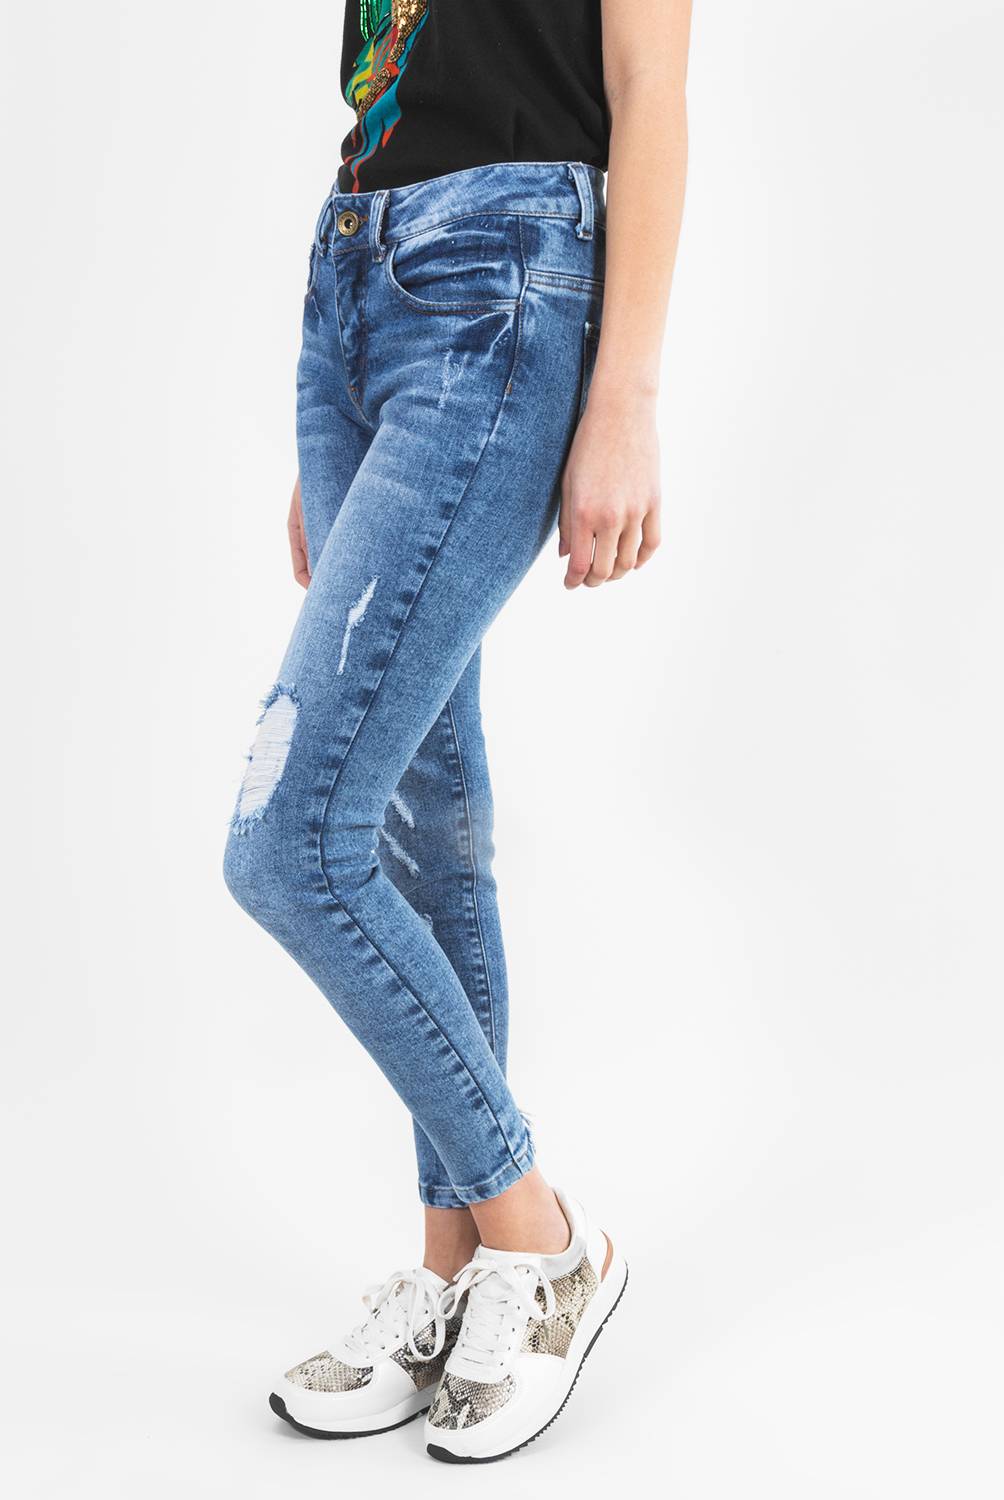 DENIMLAB - Jeans Skinny Rotos